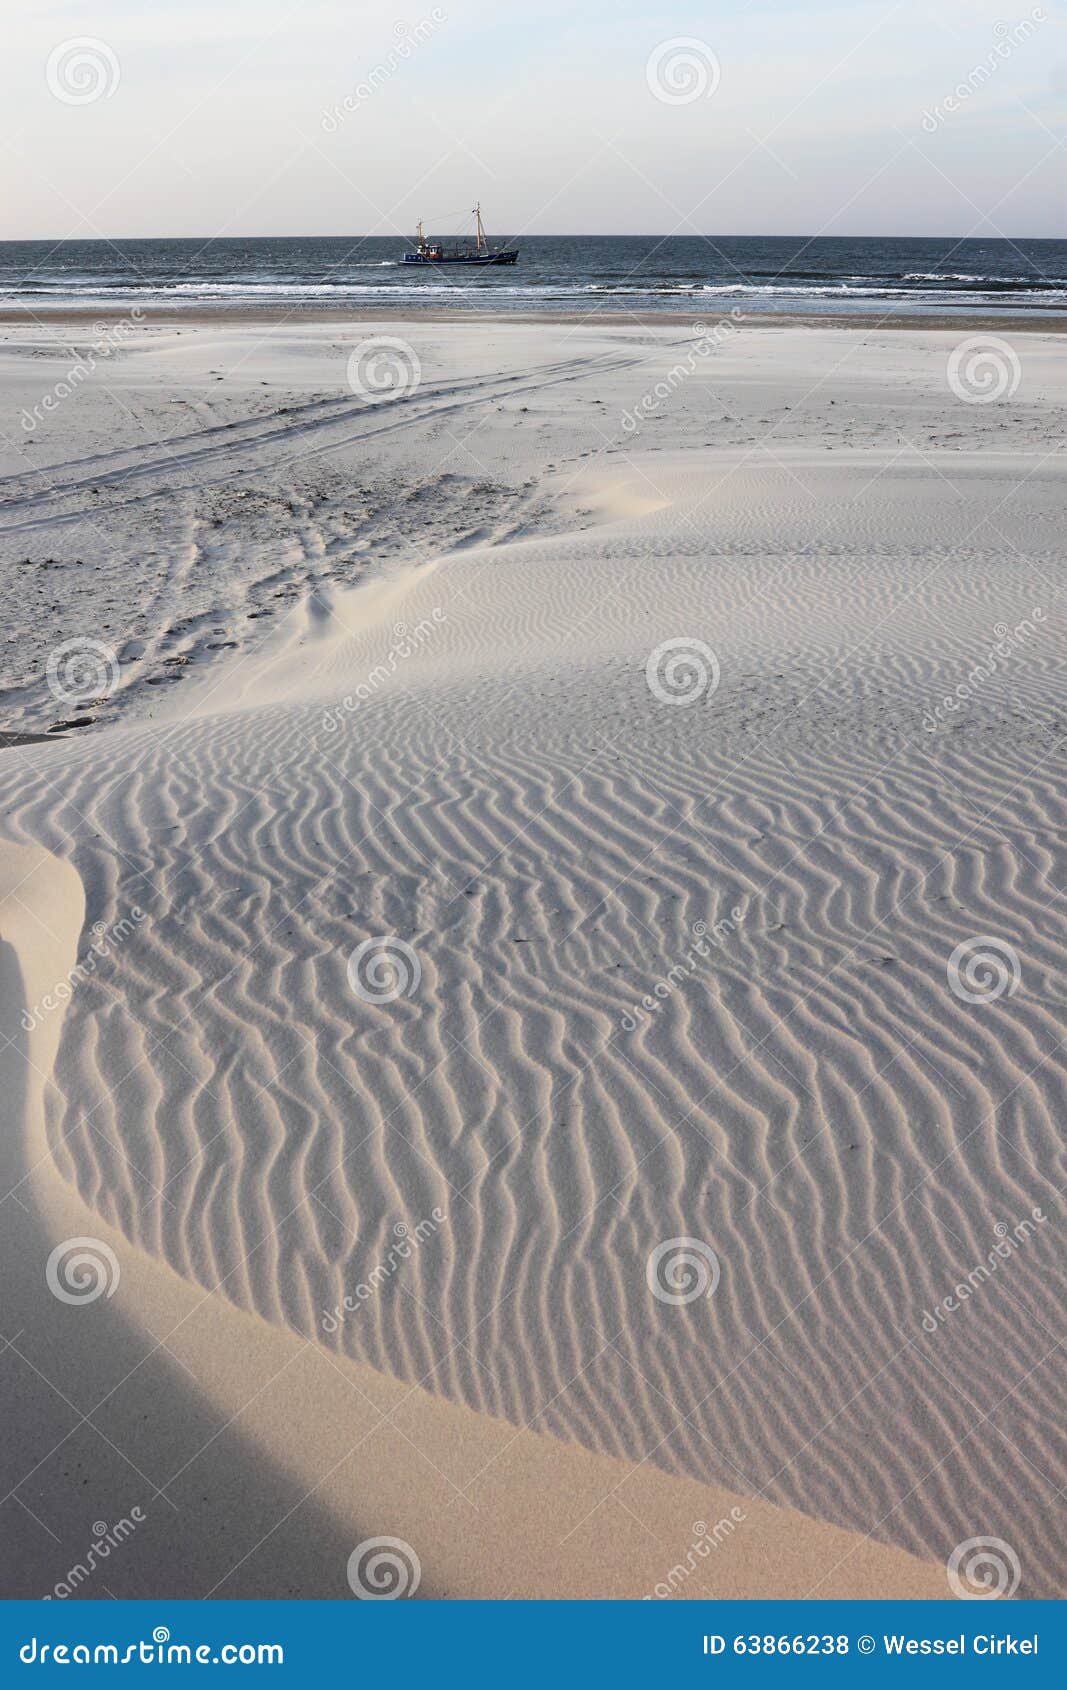 waving sand dunes at ameland beach, holland